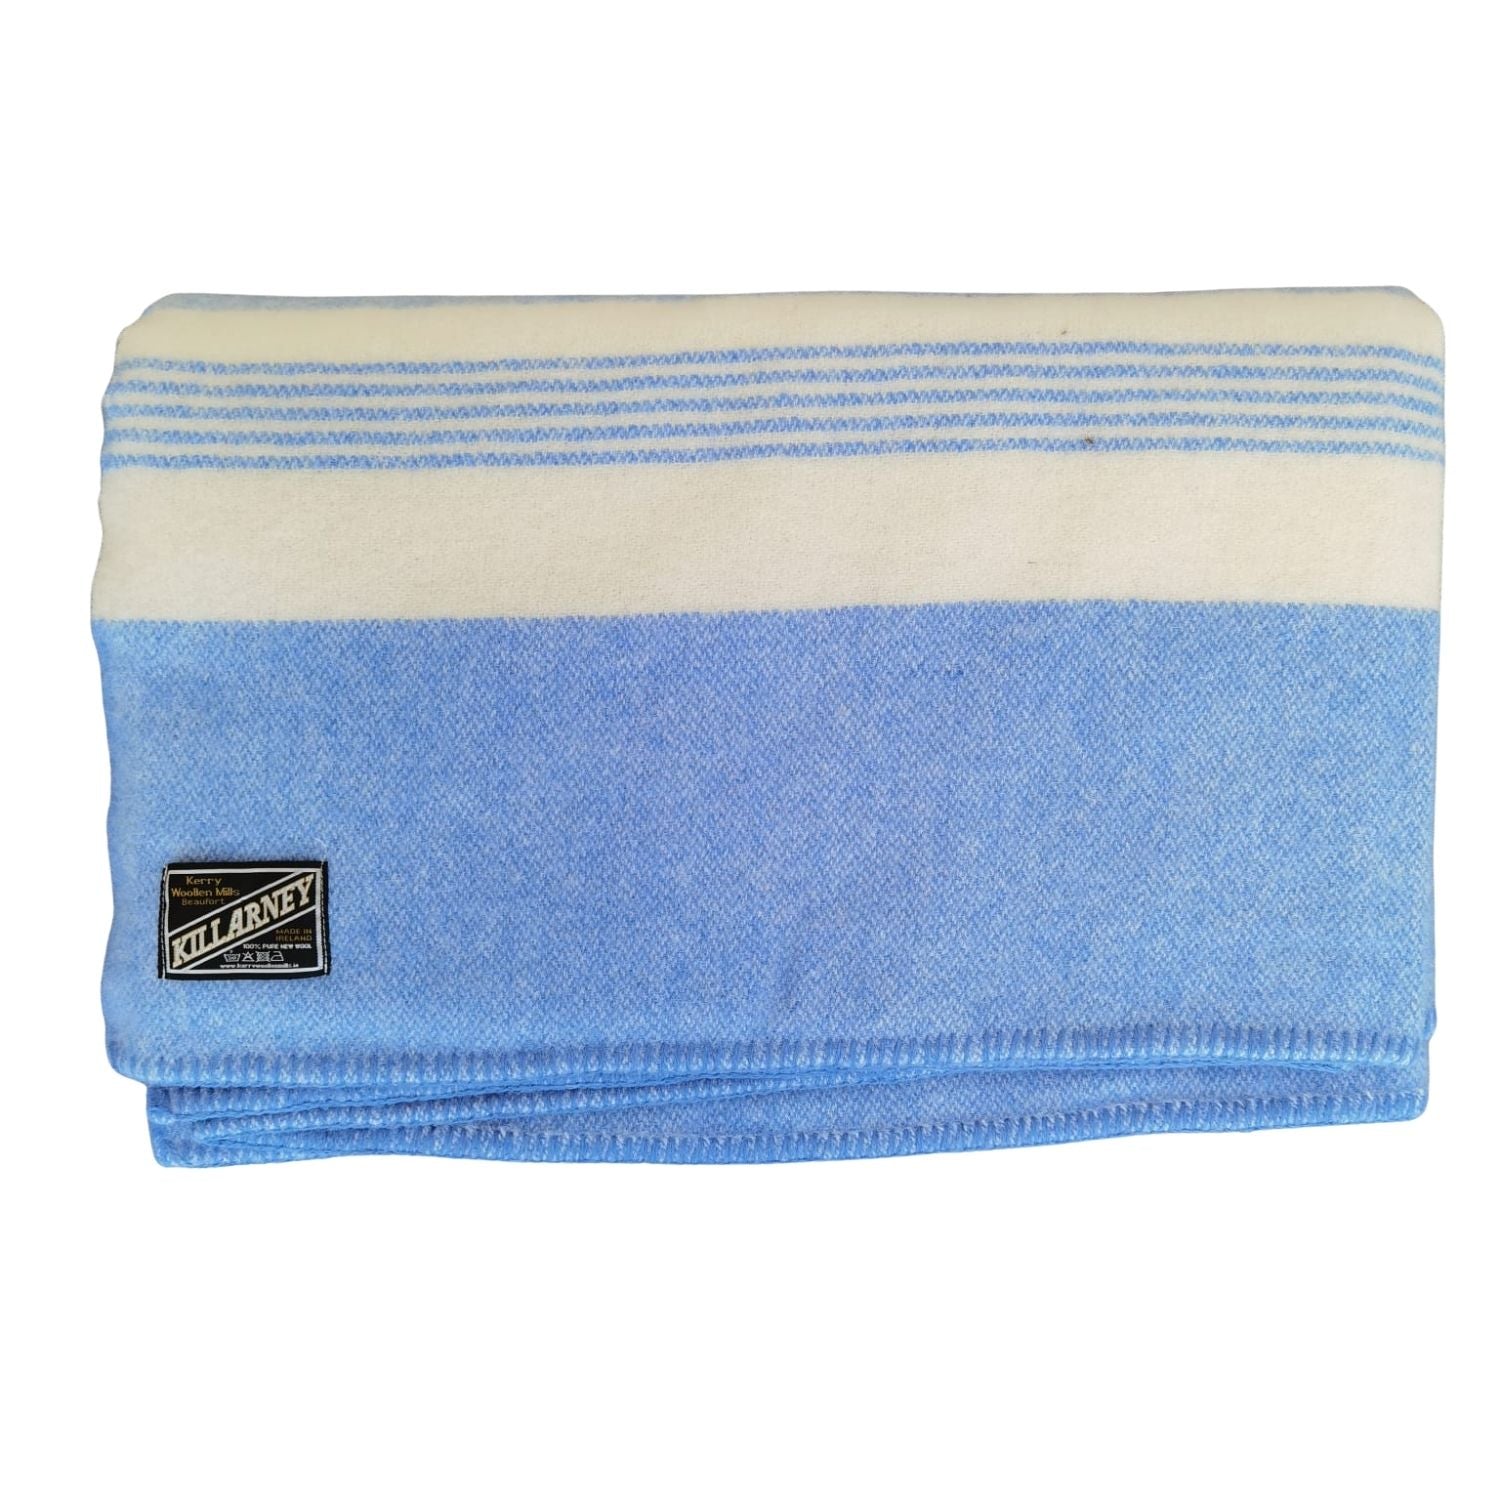 Kerry Woollen Mills 100% Pure Wool Blanket - White / Blue 1 Shaws Department Stores